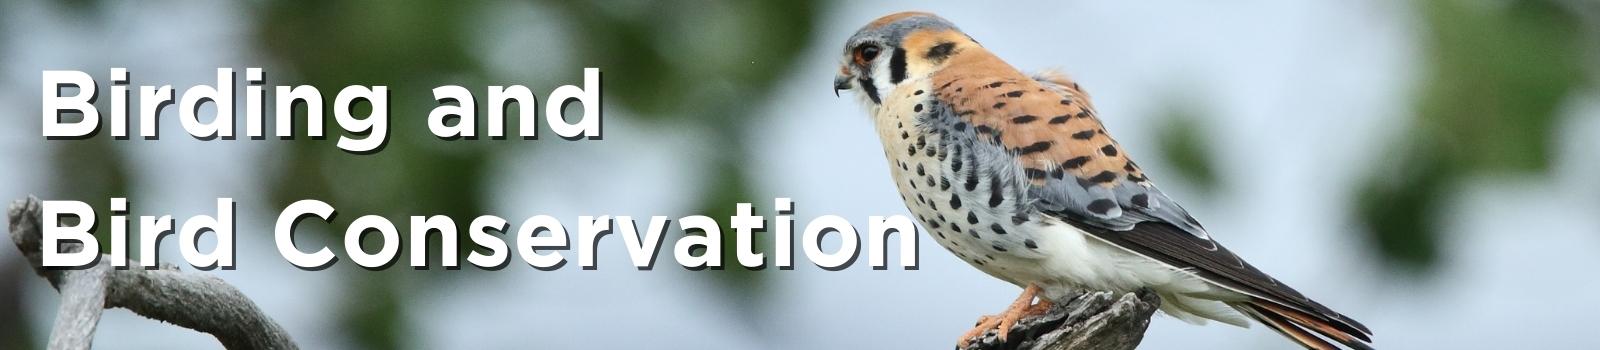 Birding and Bird Conservation.jpg